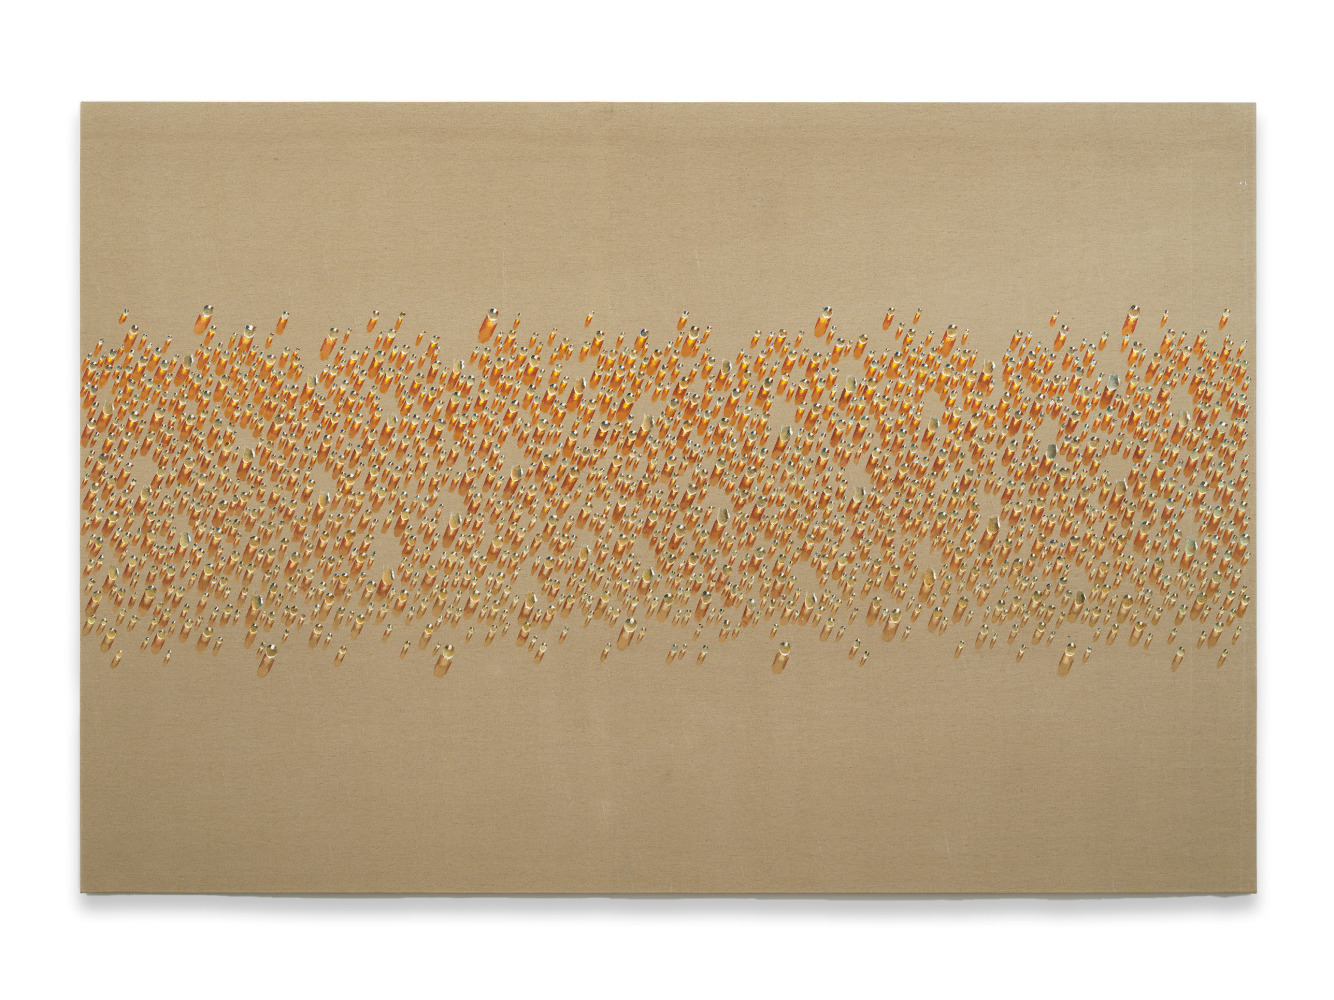 Kim Tschang-Yeul (1929-2021)
Waterdrops, 2000
Oil on canvas
101 1/2 x 151 5/8 in
285 x 385 cm